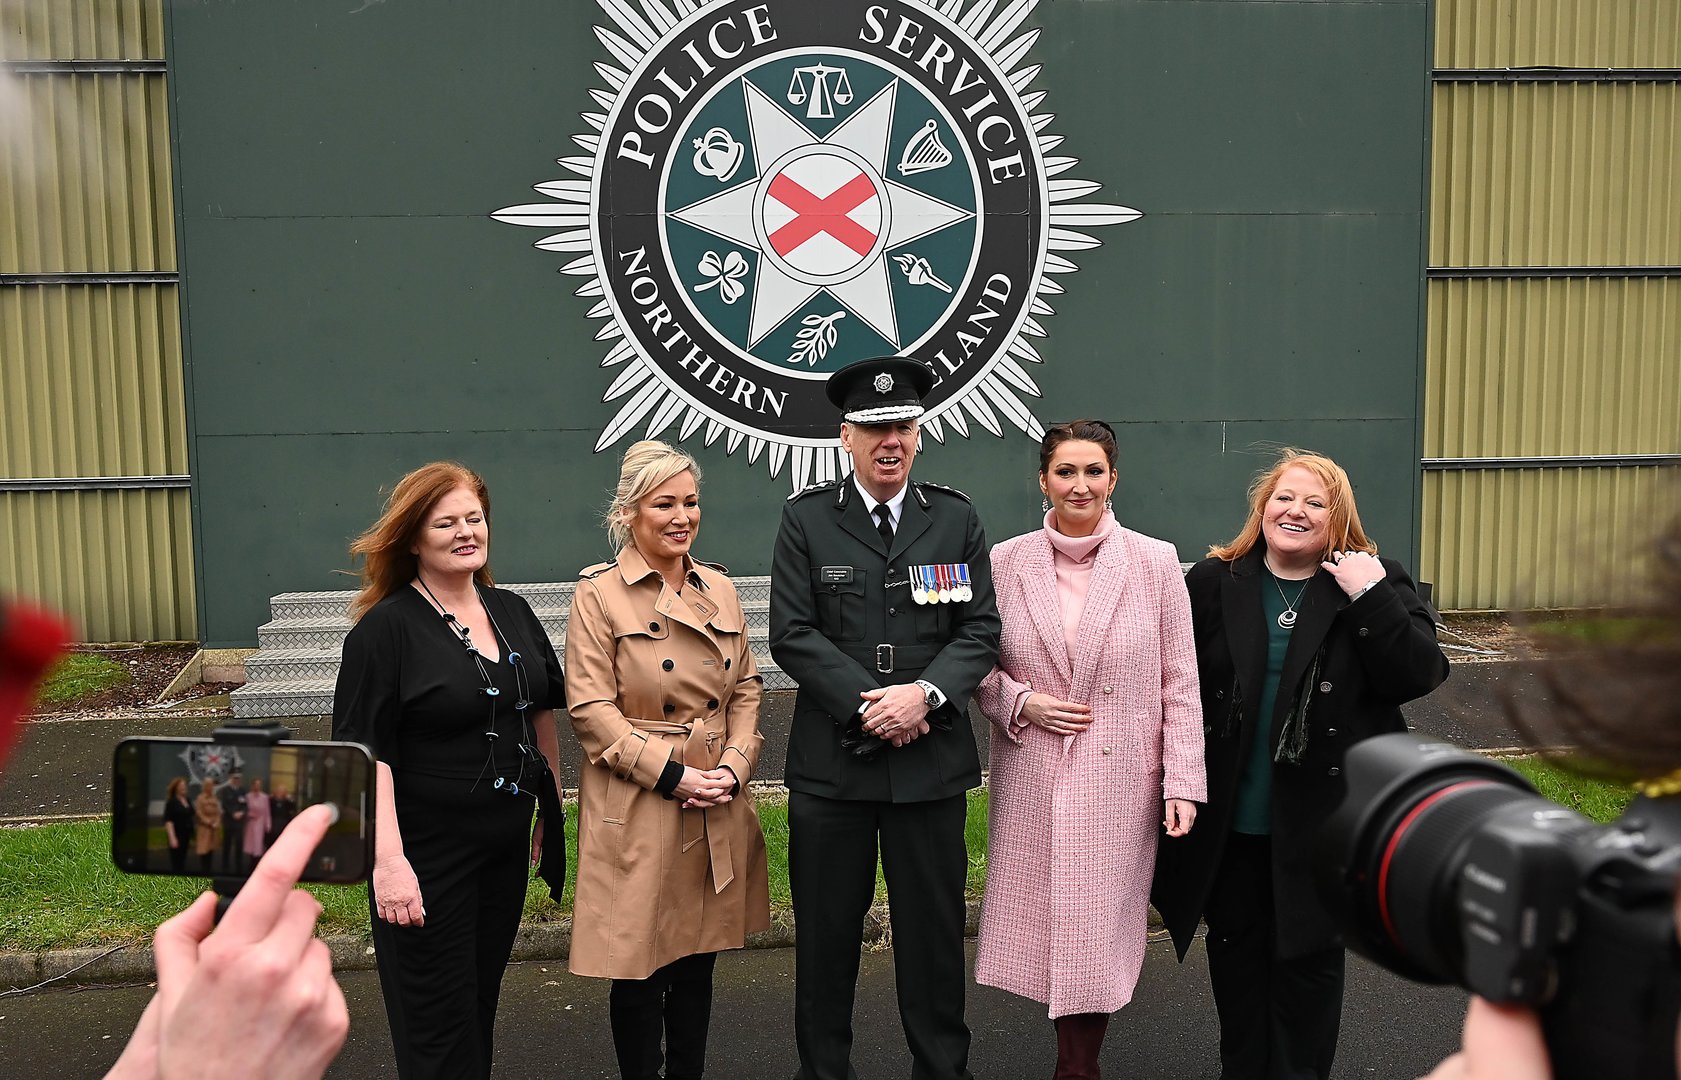 Sinn Fein leader attends police graduation in first for Northern Ireland